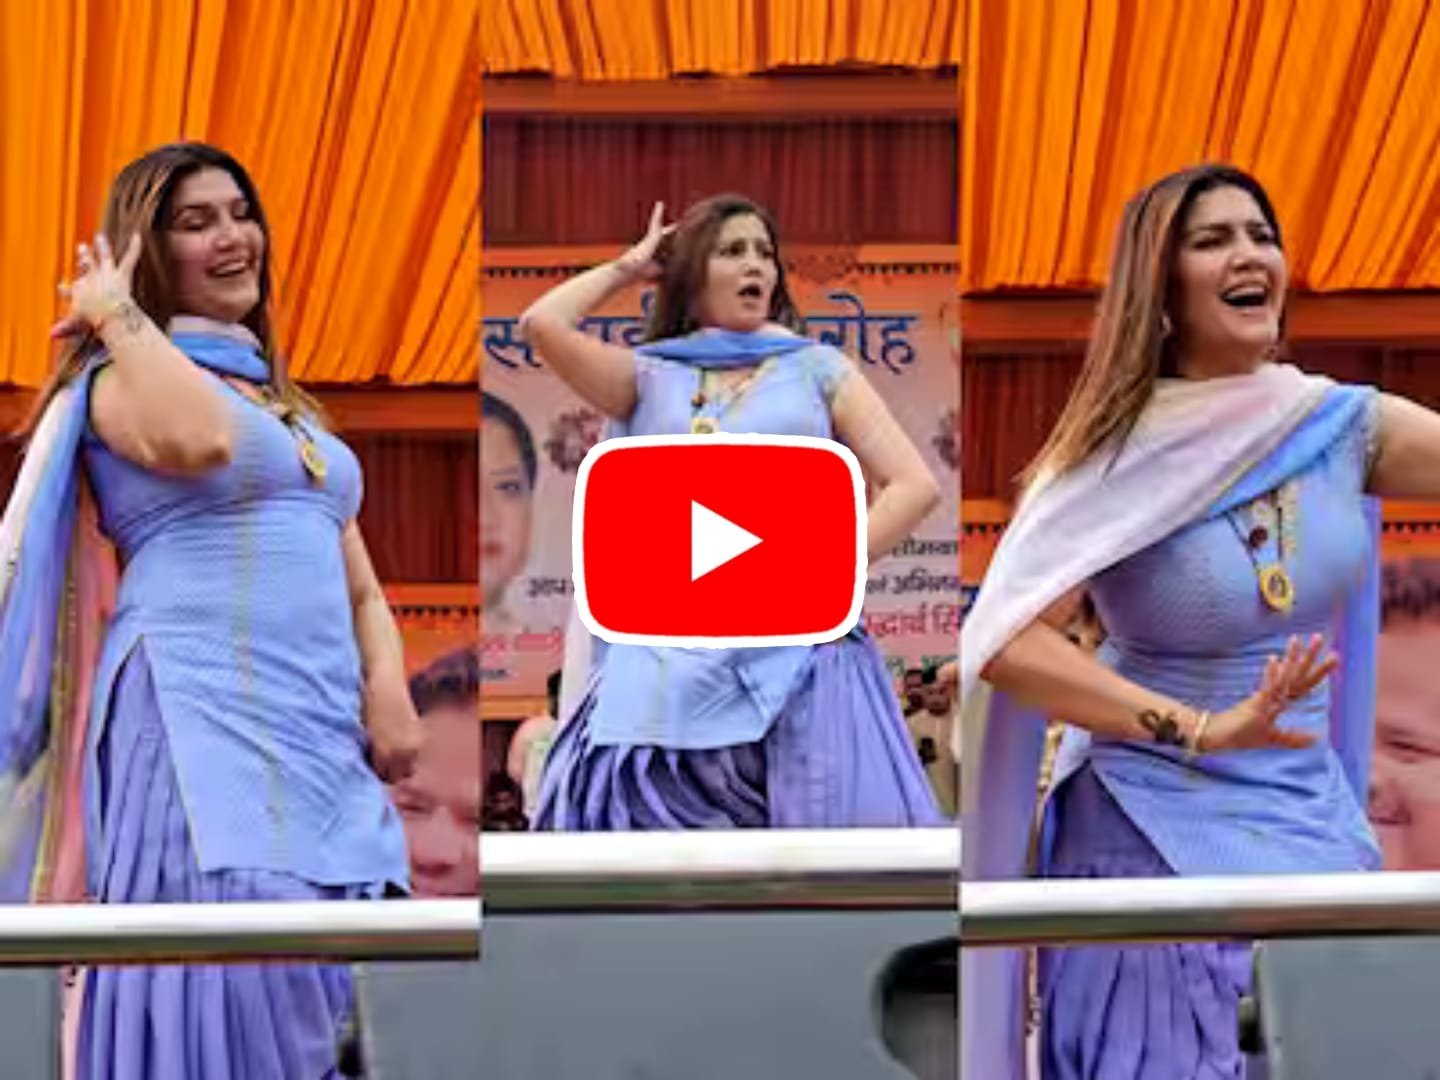 Sapna Choudhary Dance Video: Social media users are in love with Sapna Choudhary's dance moves.